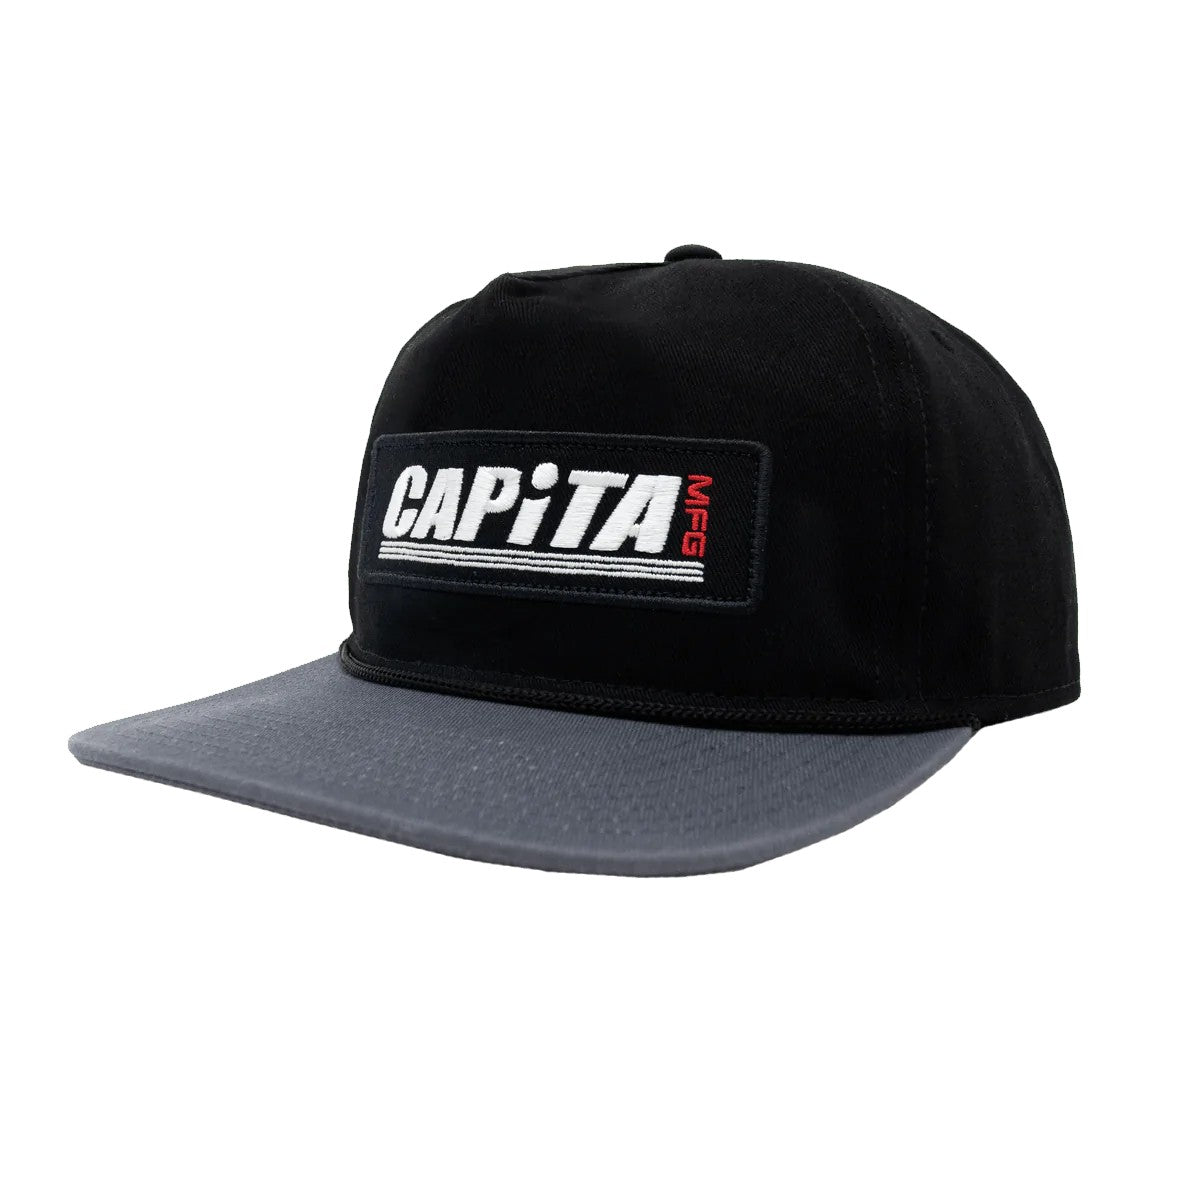 CAPiTA - MFG Cap - Black / Grey